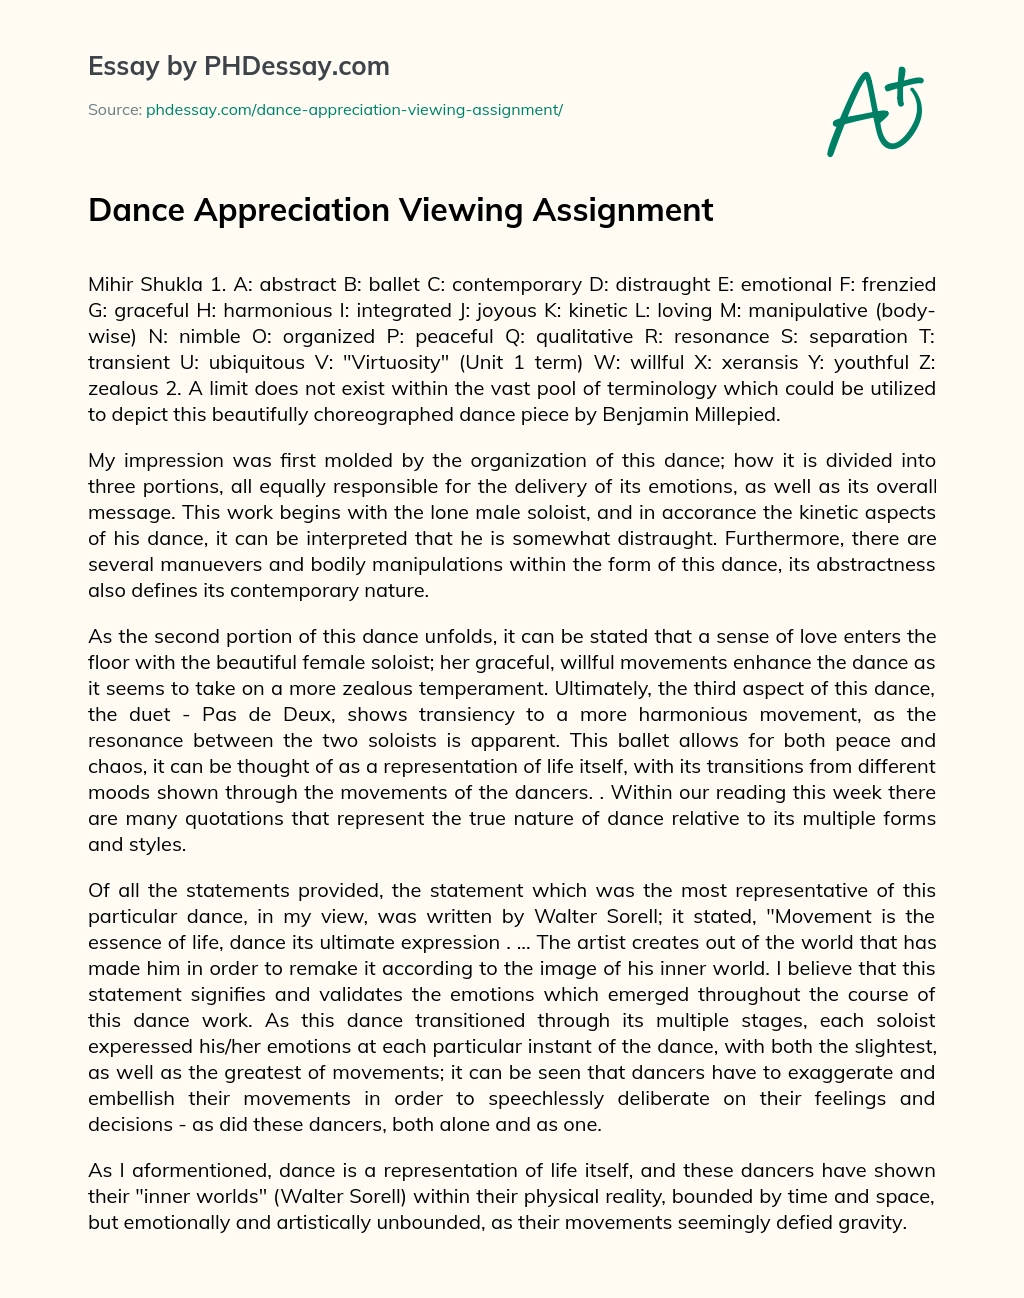 Dance Appreciation Viewing Assignment essay